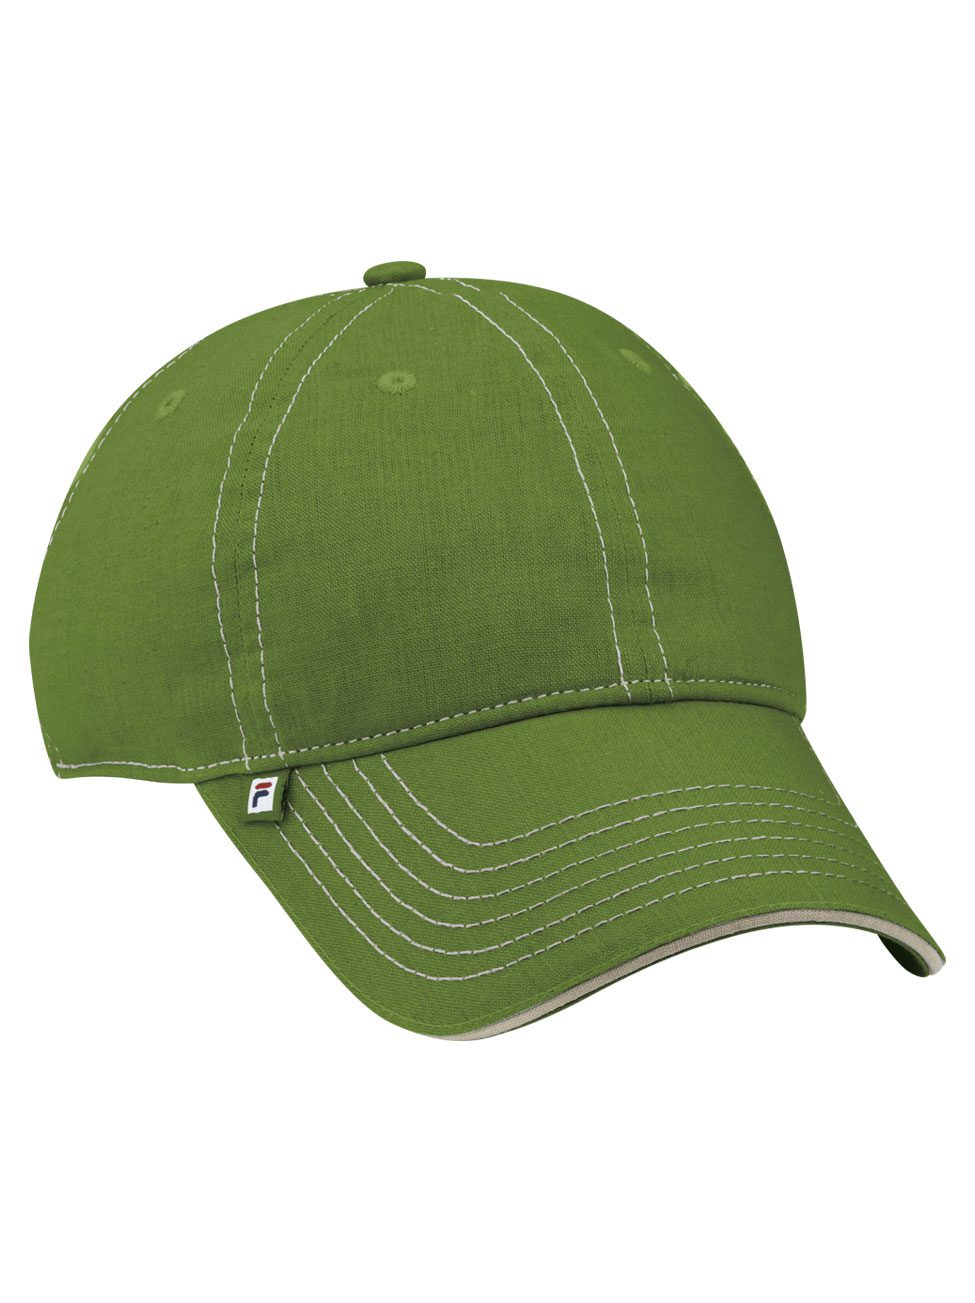 Fila Lucca Baseball Hat #FA2210 Pine Green